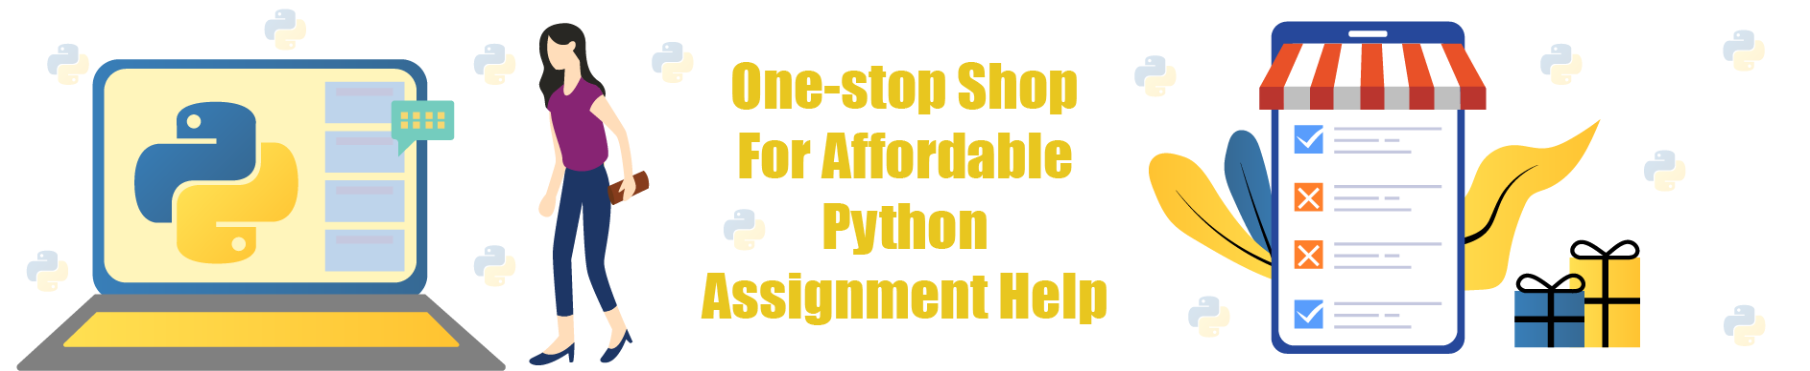 Python Homework Help Banner 1